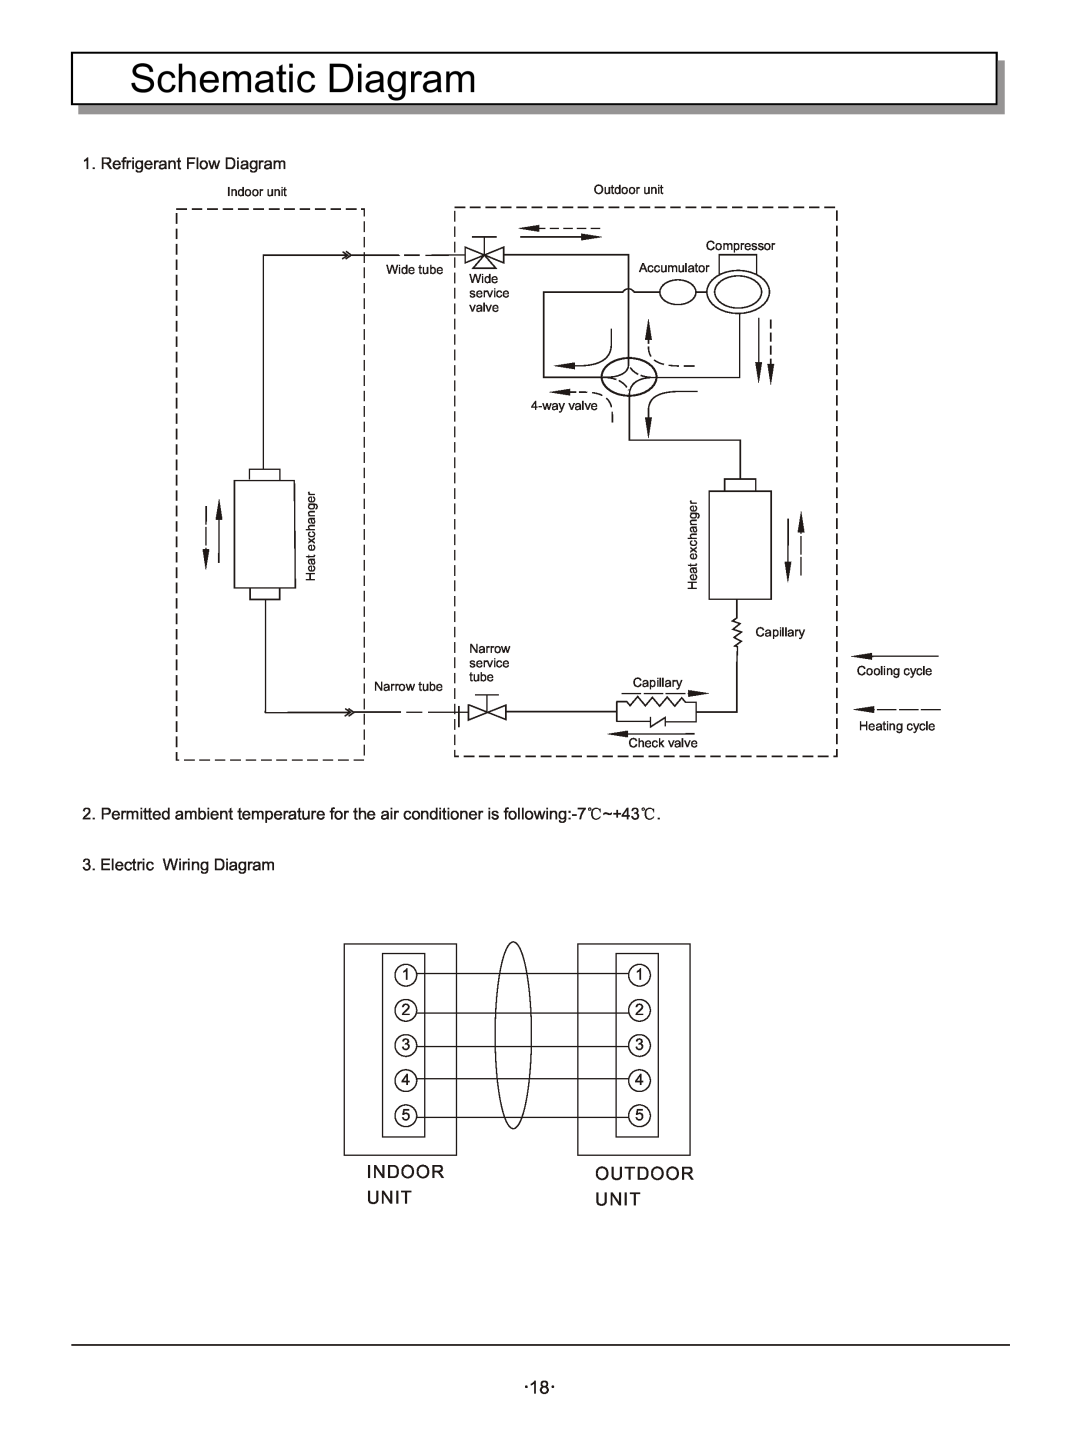 Hisense Group KFR-3208GW instruction manual Schematic Diagram, Indoor, Outdoor, Unit 